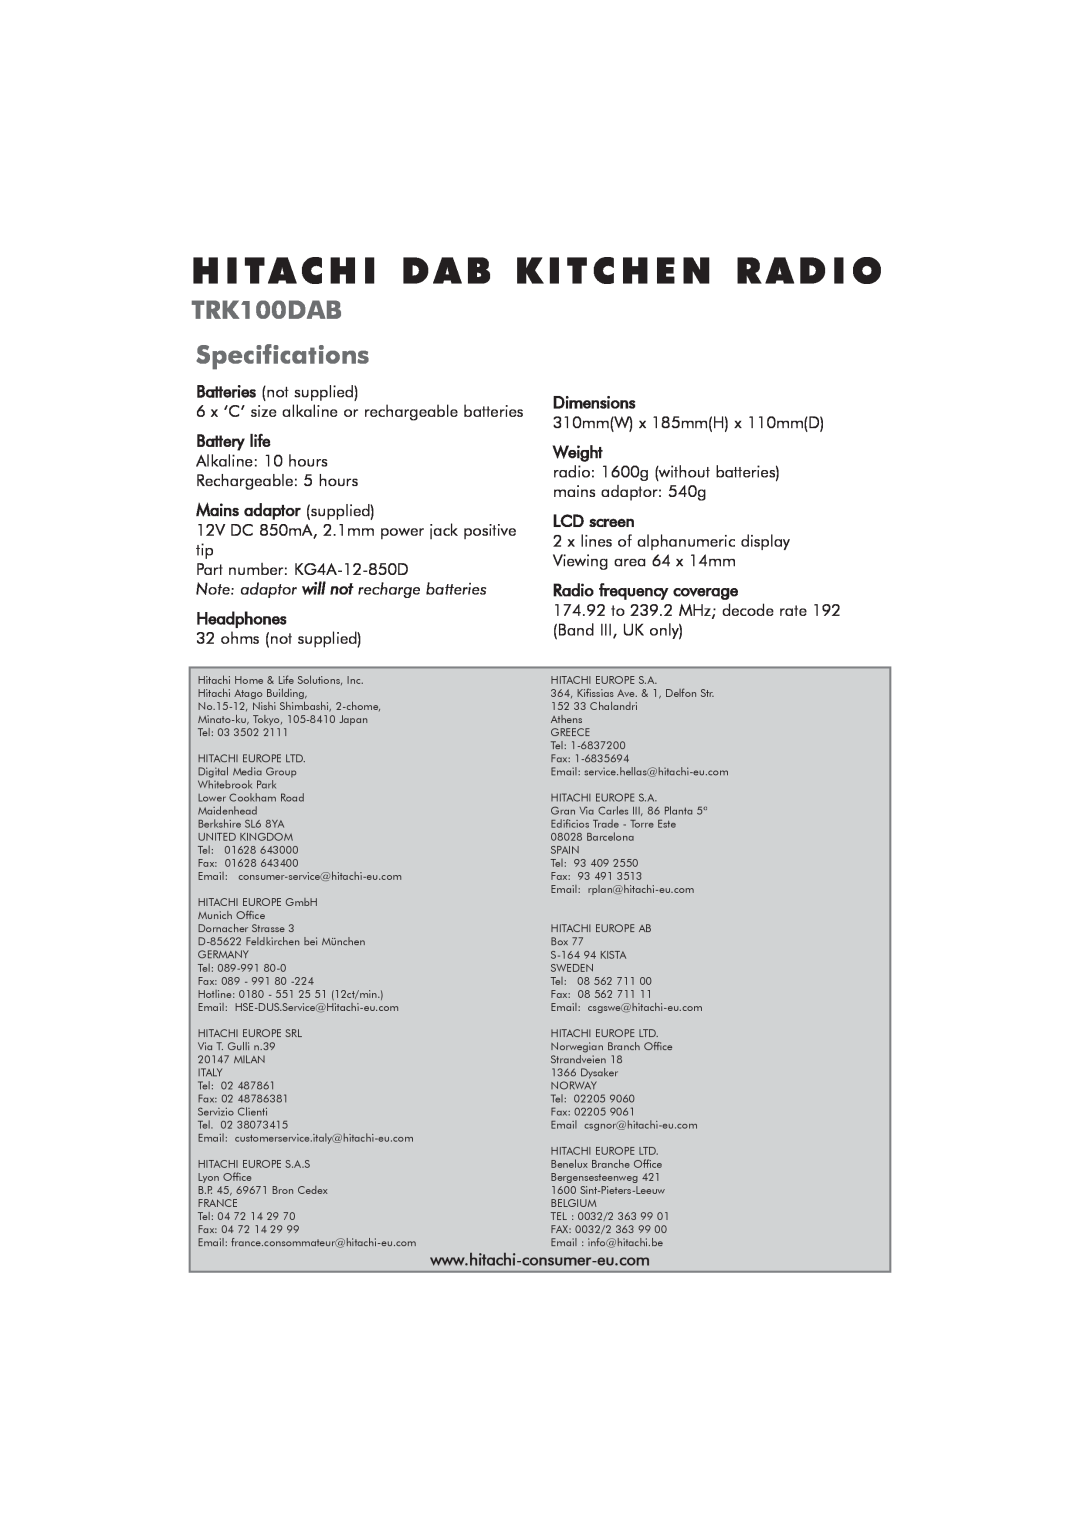 Hitachi Hitachi Dab Kitchen Radio, TRK100DAB Specifications, Battery life, Mains adaptor supplied, Headphones, Weight 